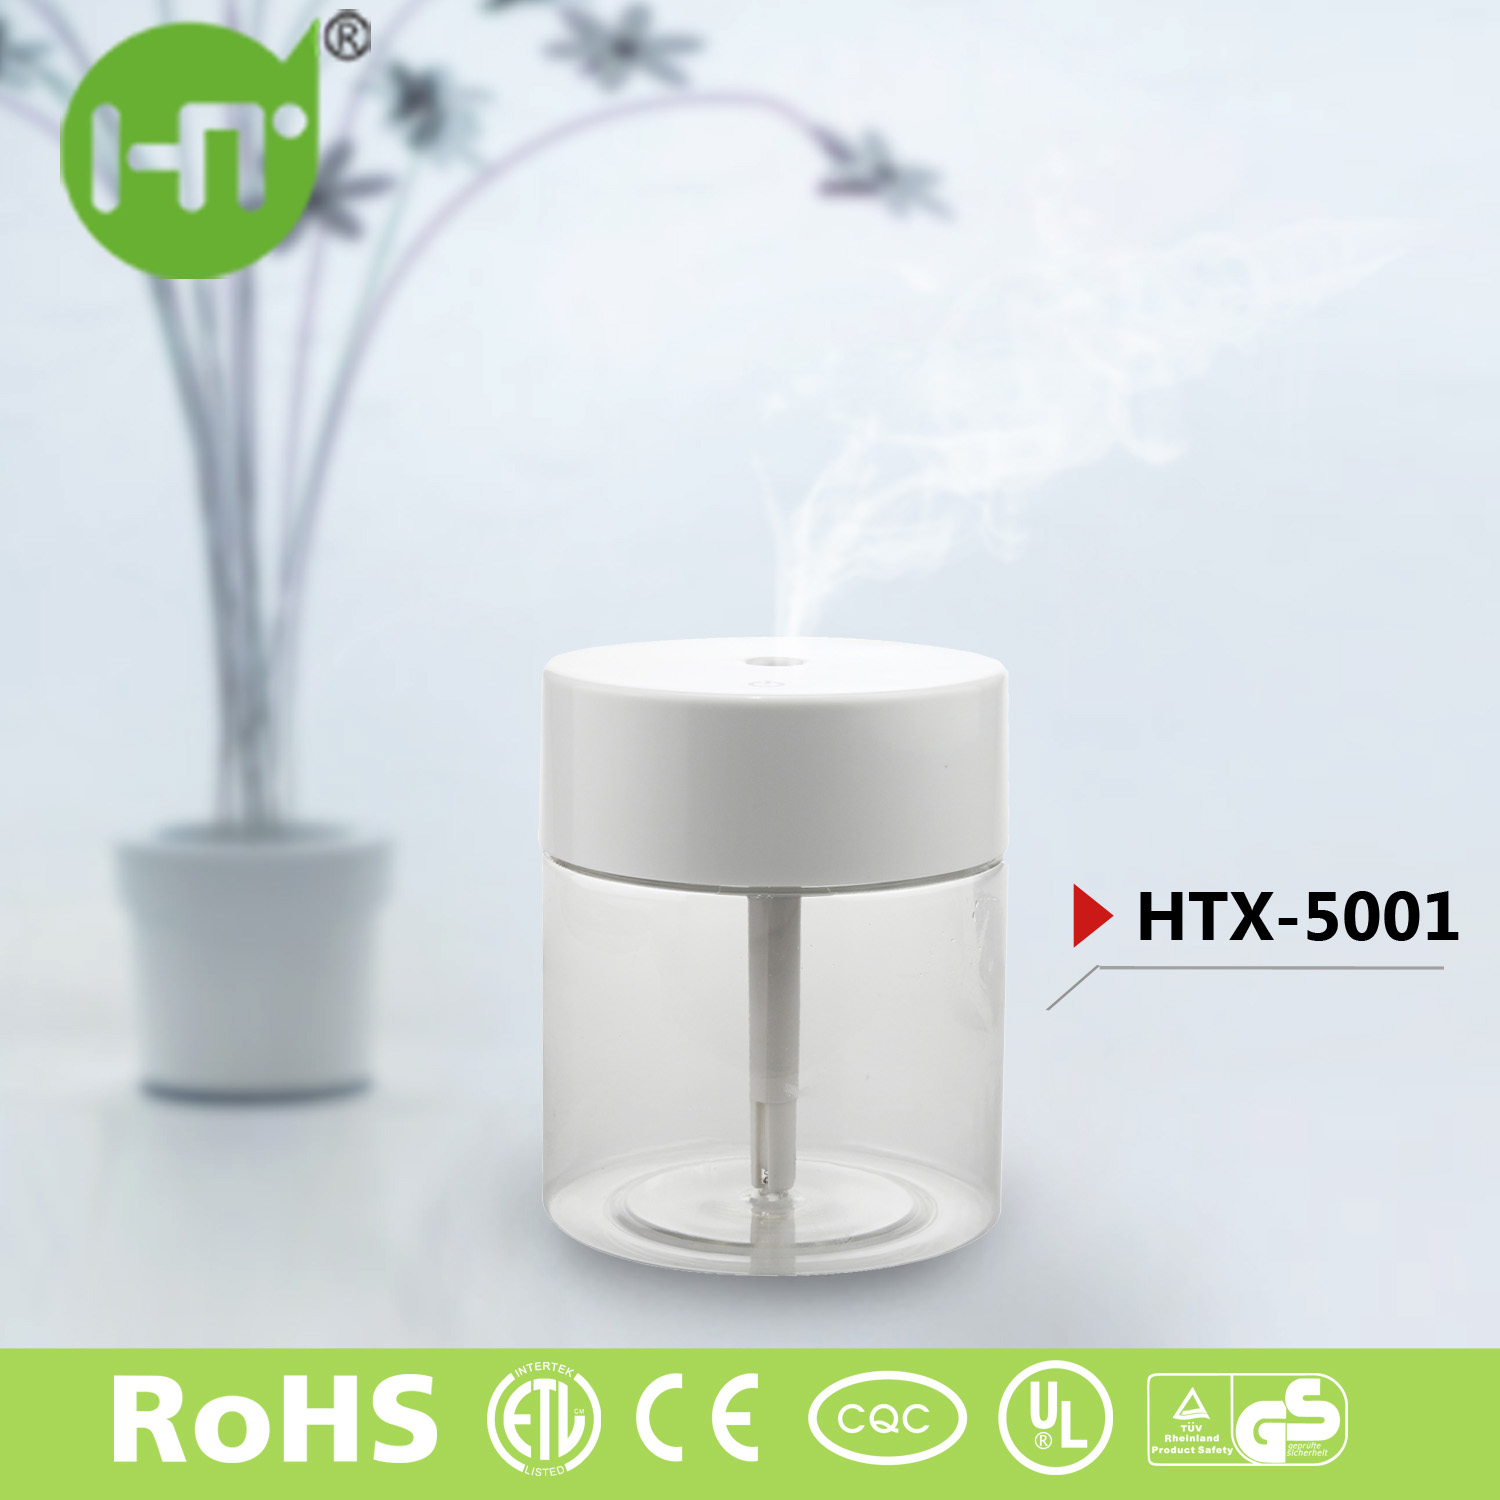 HTX-5001 0.4L 2015 Smart Touch Control Car Air Cooler Diffuser Ultrasonic Humidifier USB Diffuser